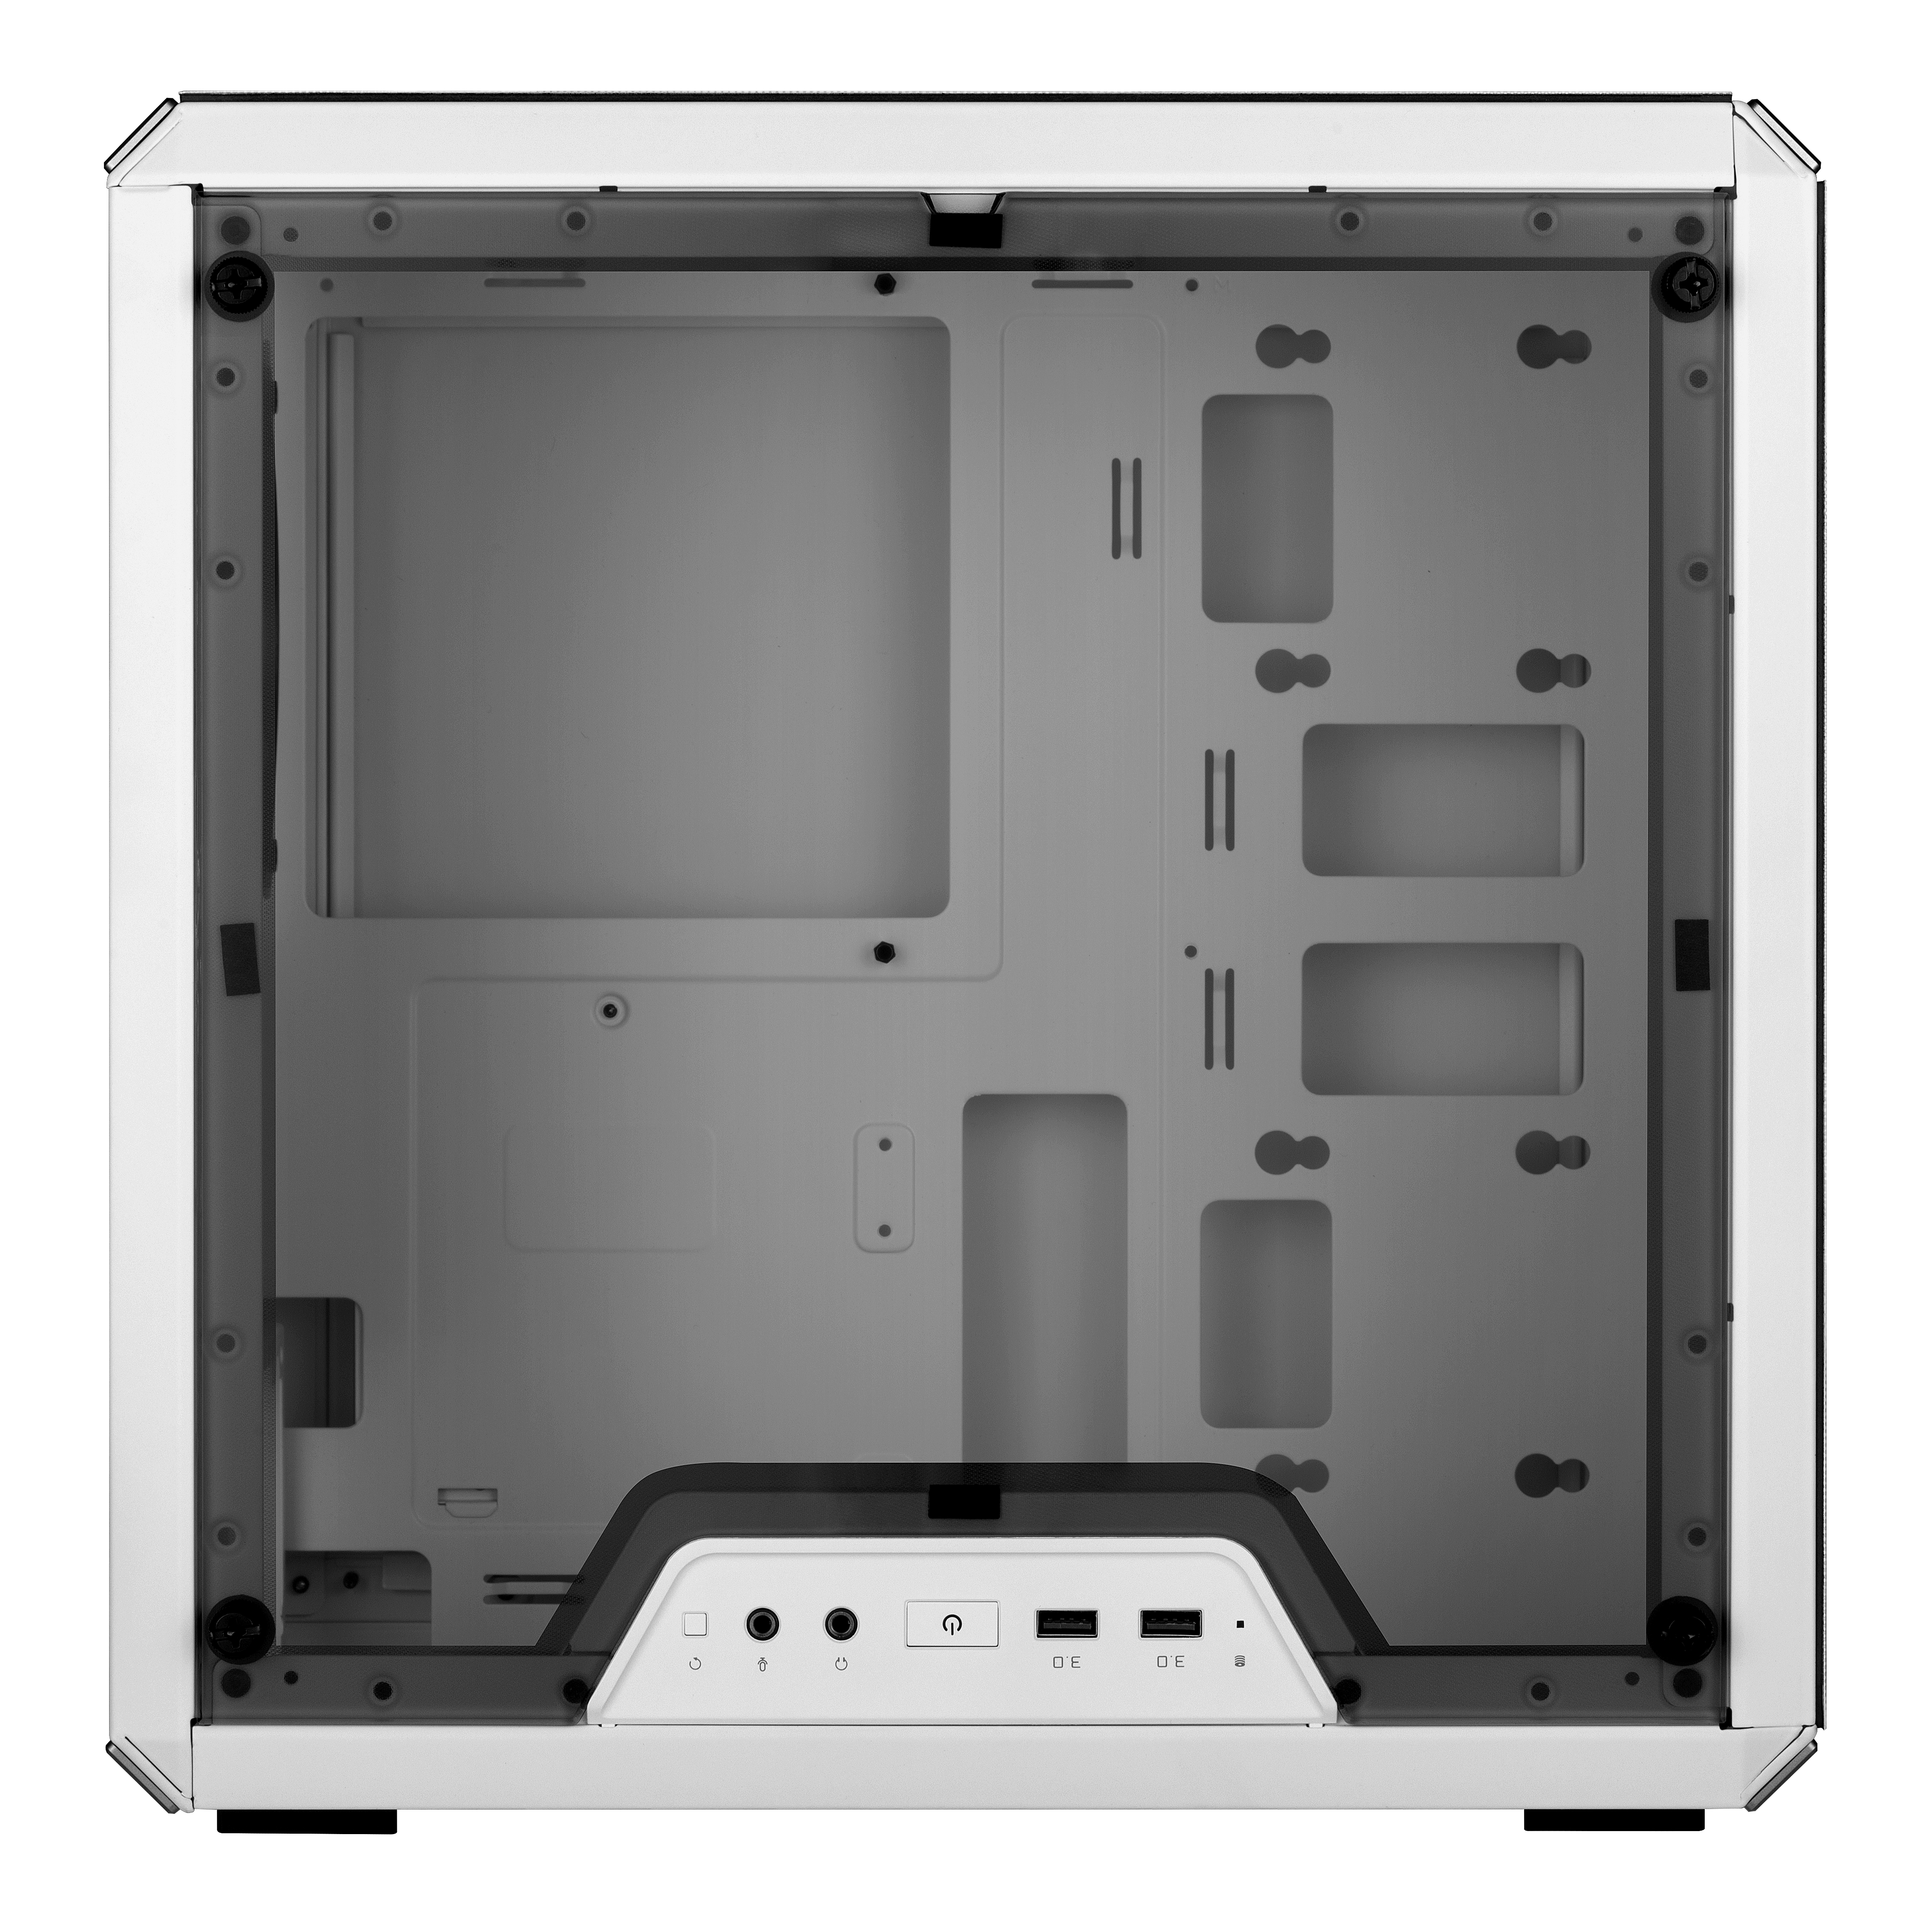 Cooler Master - Cooler Master MasterBox Q300L Micro-ATX Case - White Window